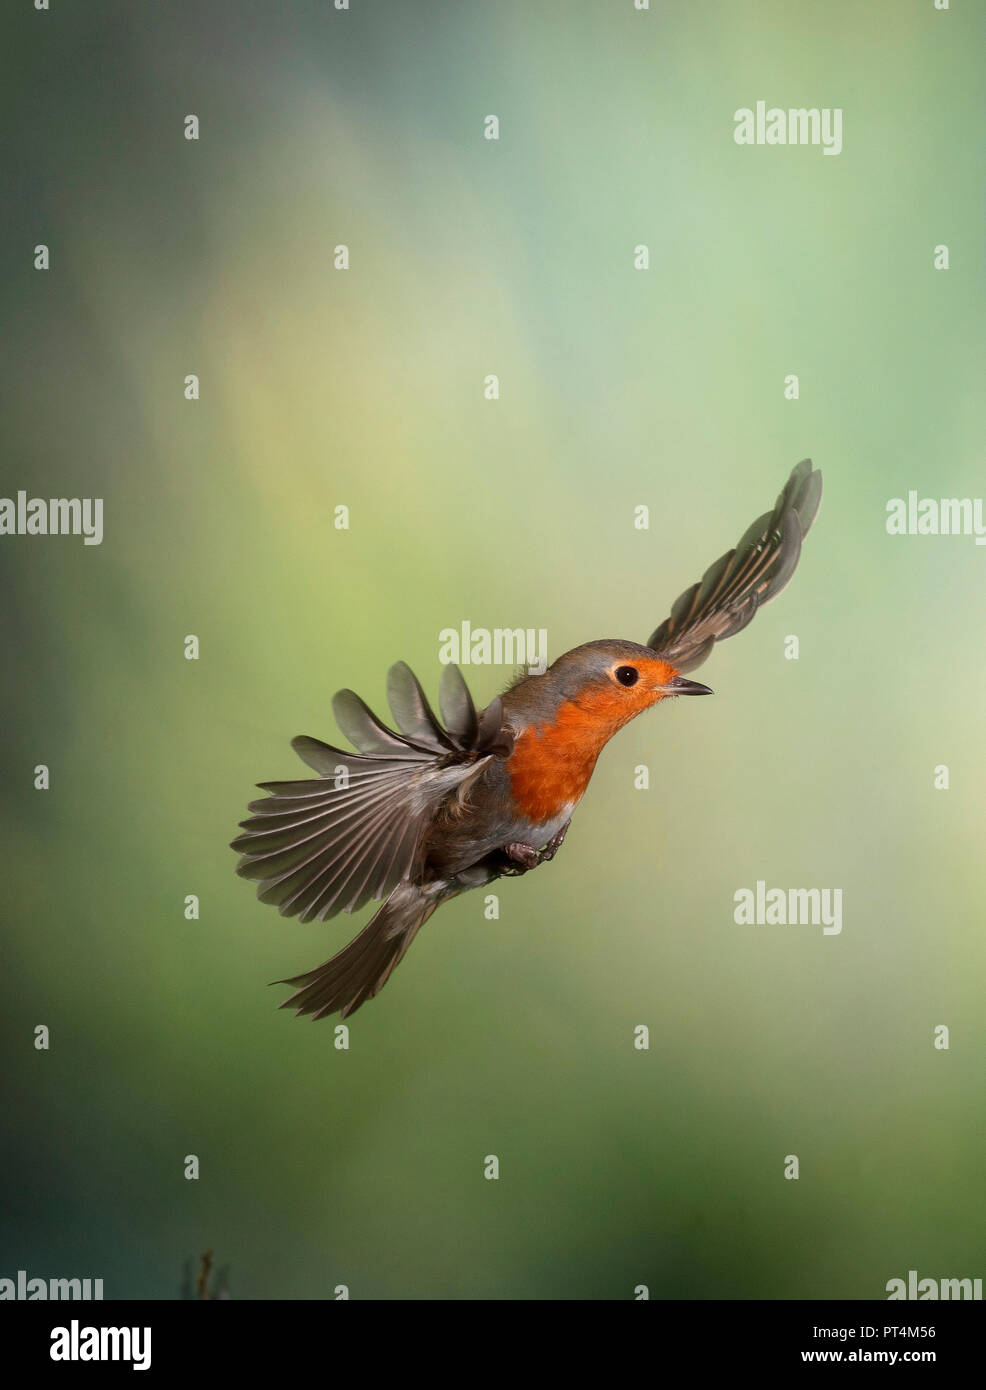 Robin frozen in mid flight (revised image) Stock Photo